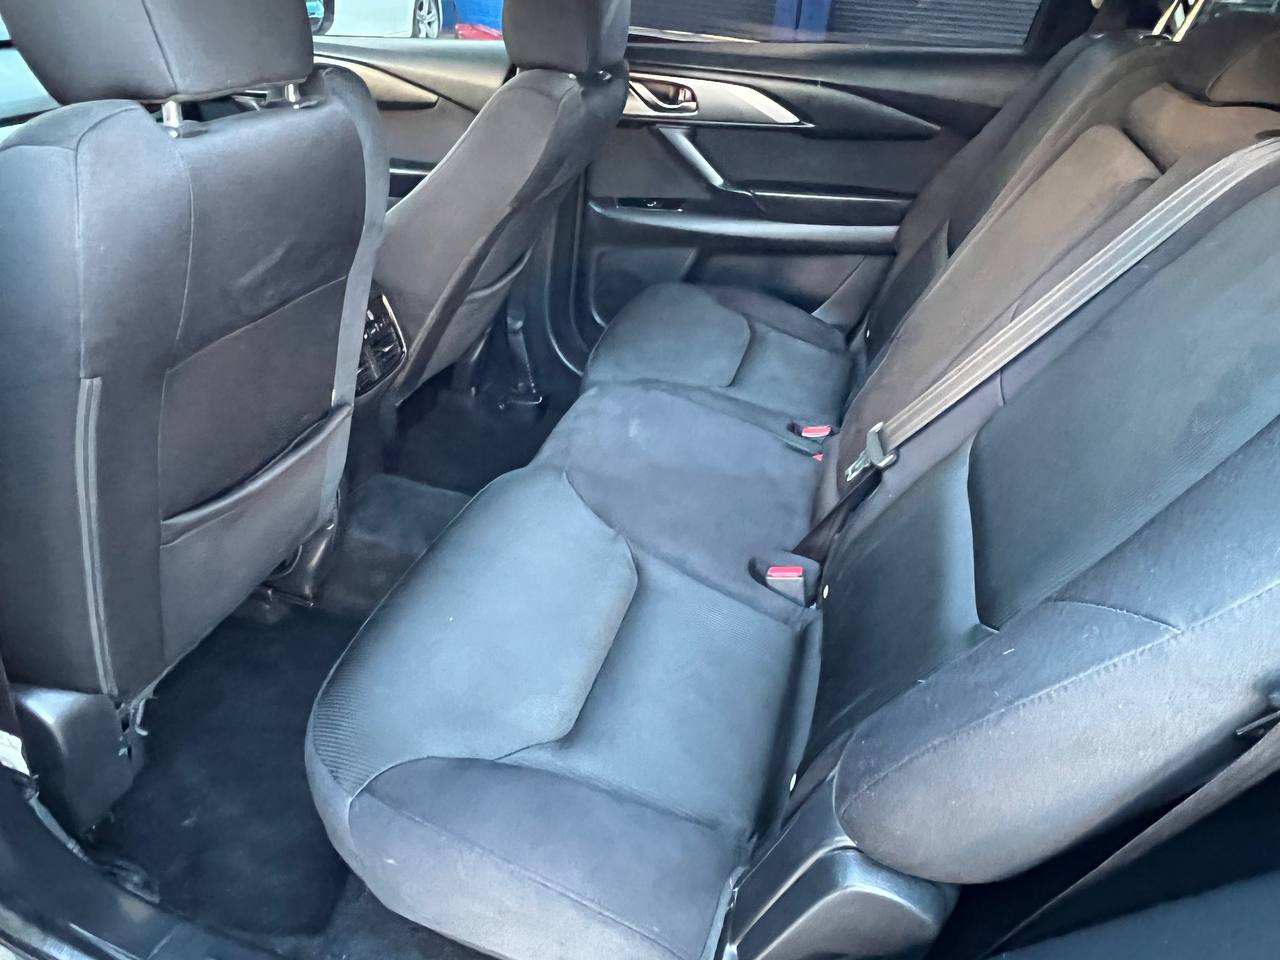 Used - Mazda CX-9 SUV for sale in Staten Island NY